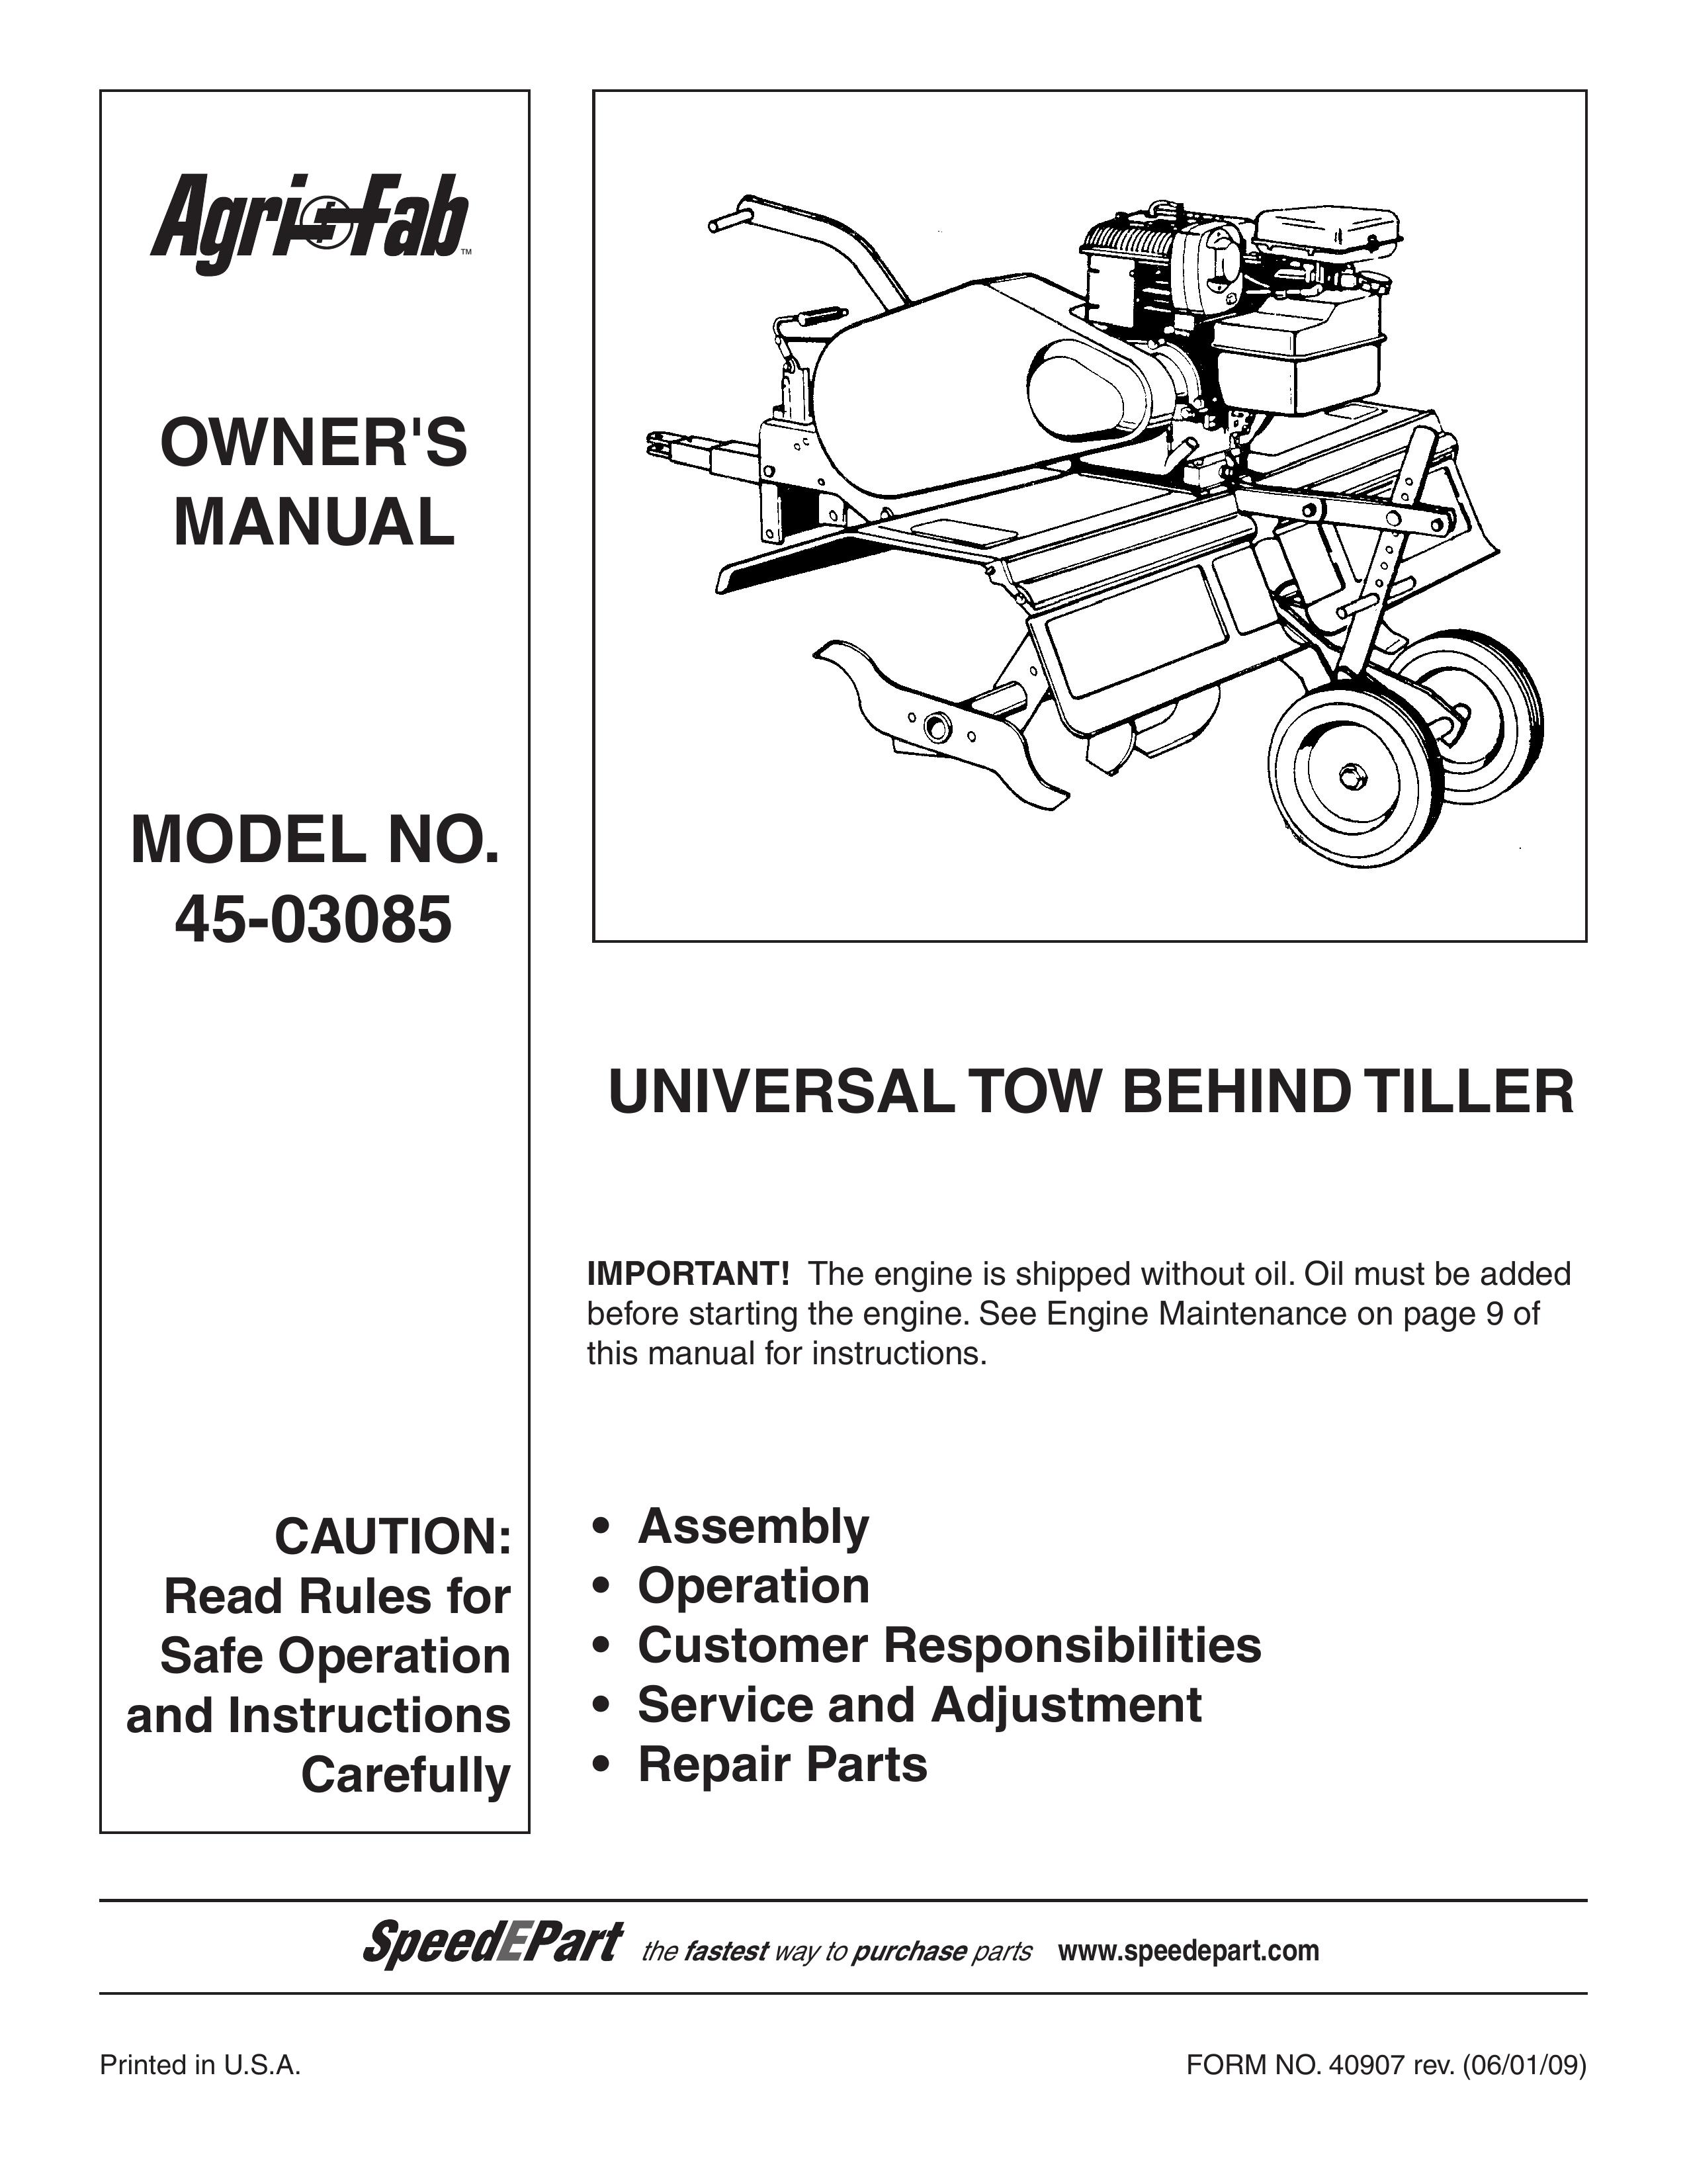 Agri-Fab 45-03085 Tiller User Manual